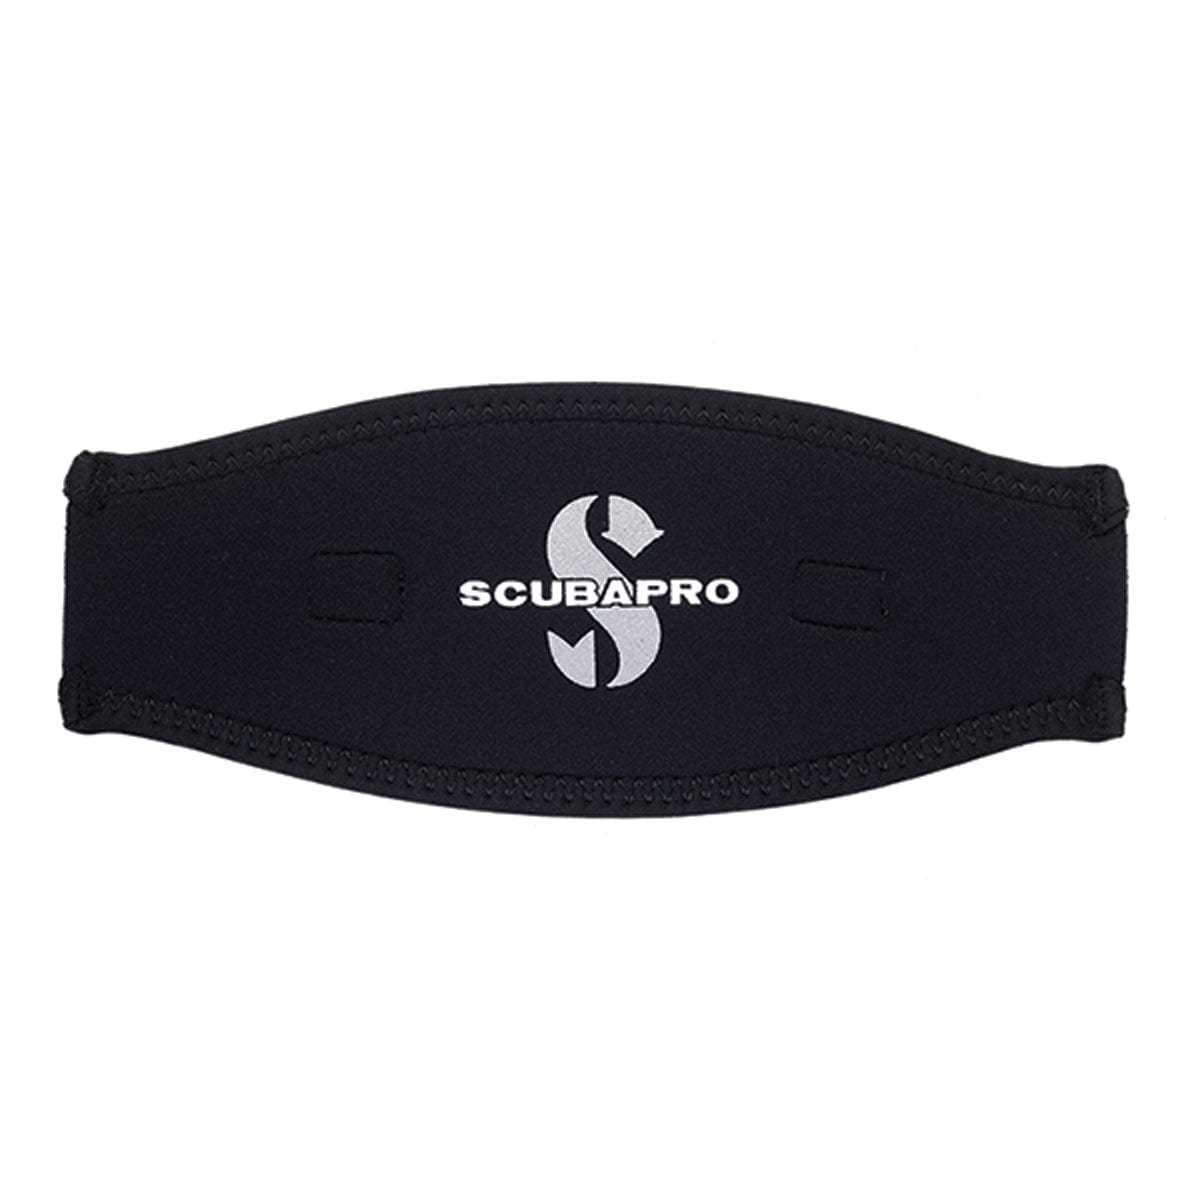 Scubapro Neoprene Mask Strap 2.5MM - Black/Yellow - 18